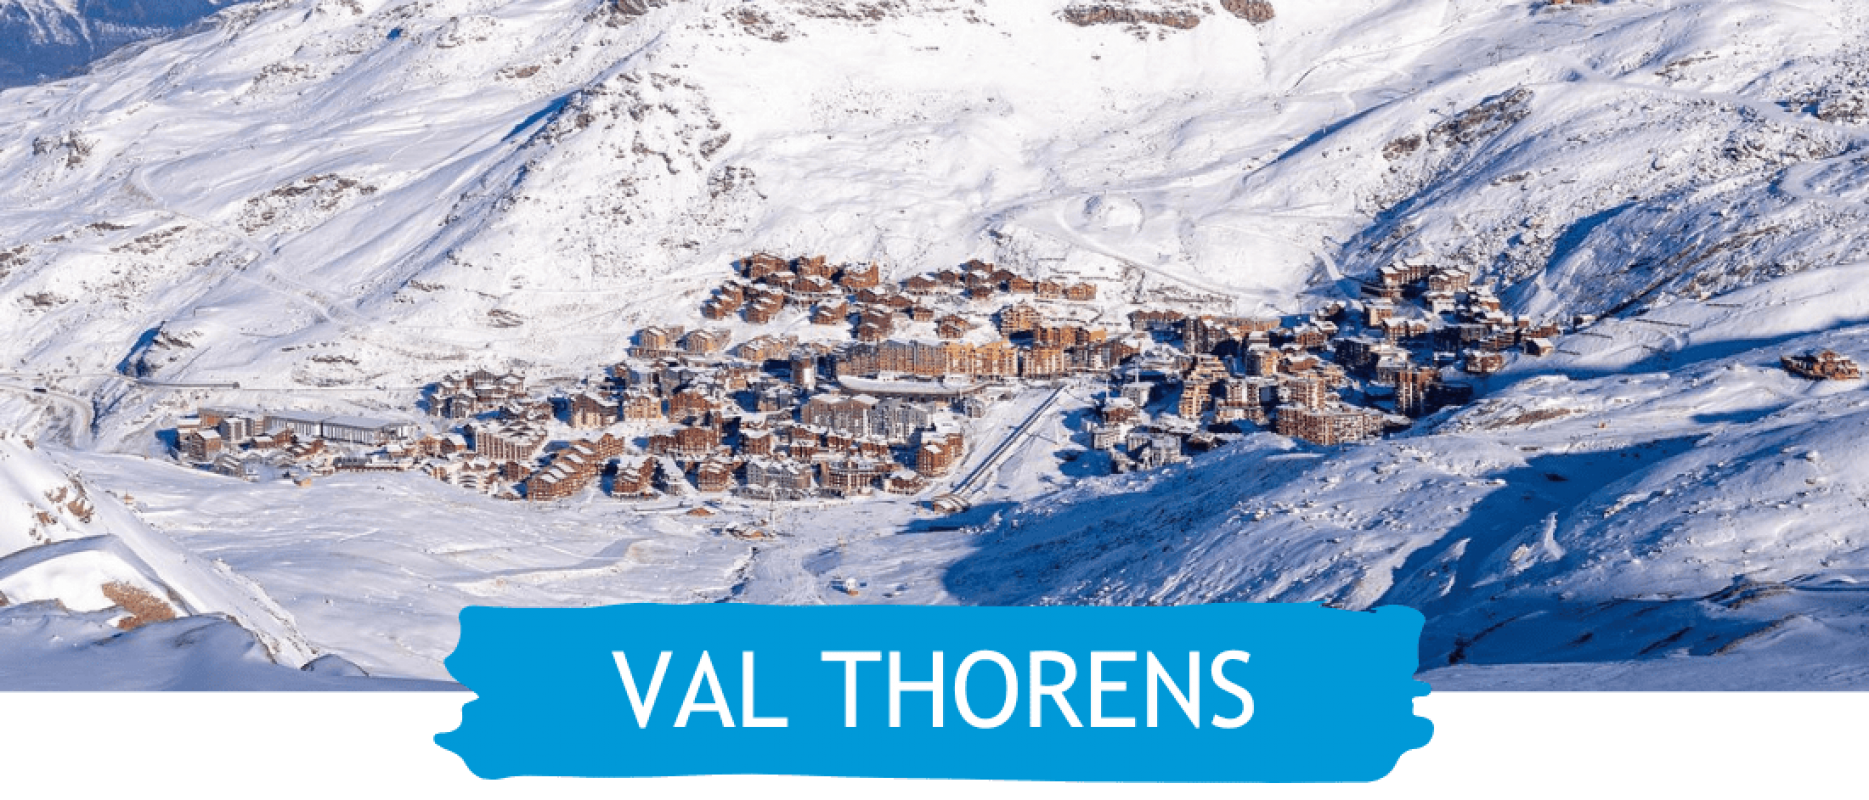 Val Thorens 8 night Eurostar ski train package